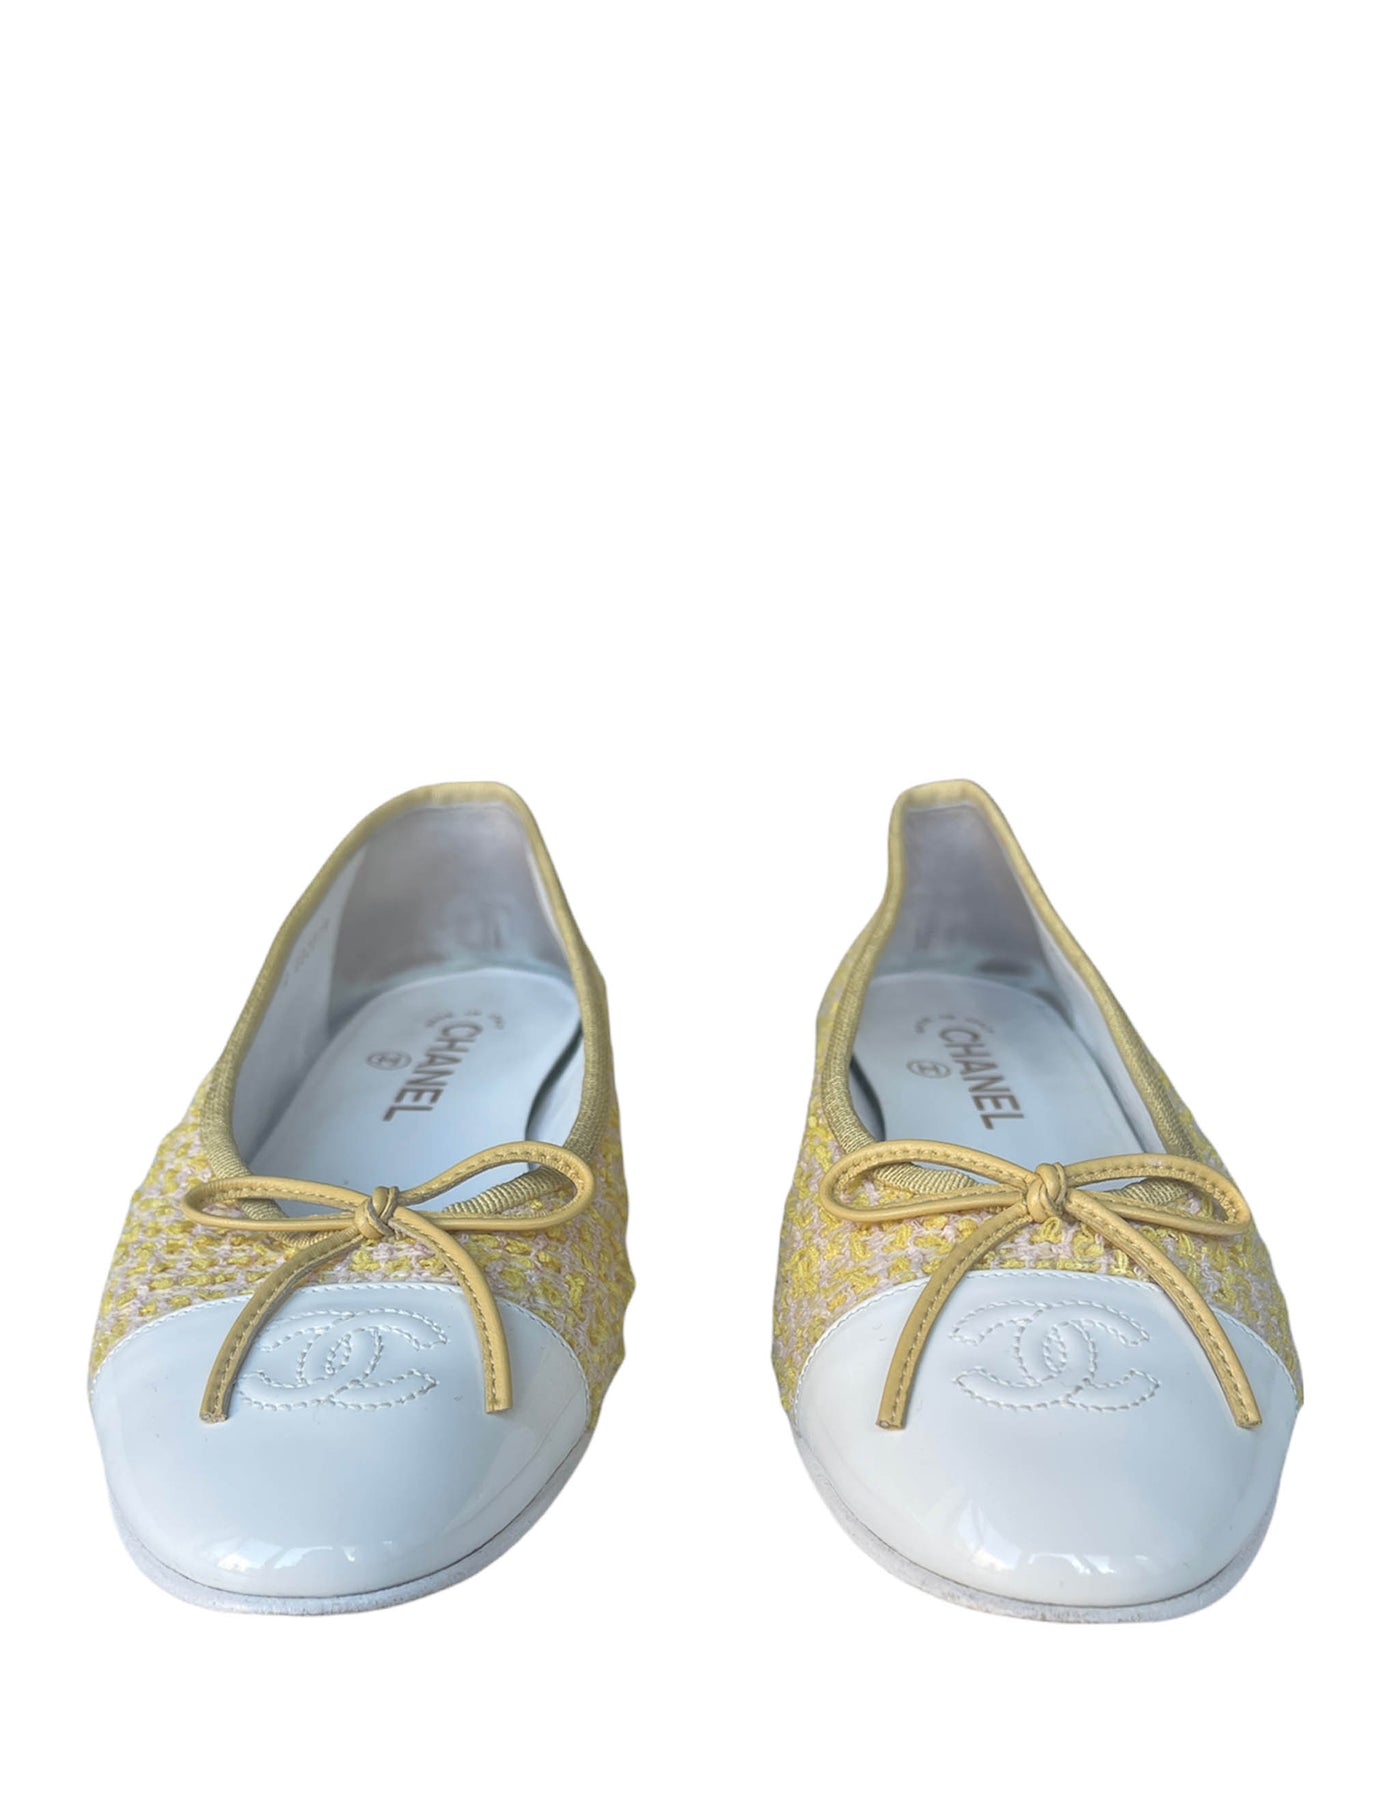 Chanel Shoes Ballerina Ballet Flats White / Black 39 / 9 New at 1stDibs